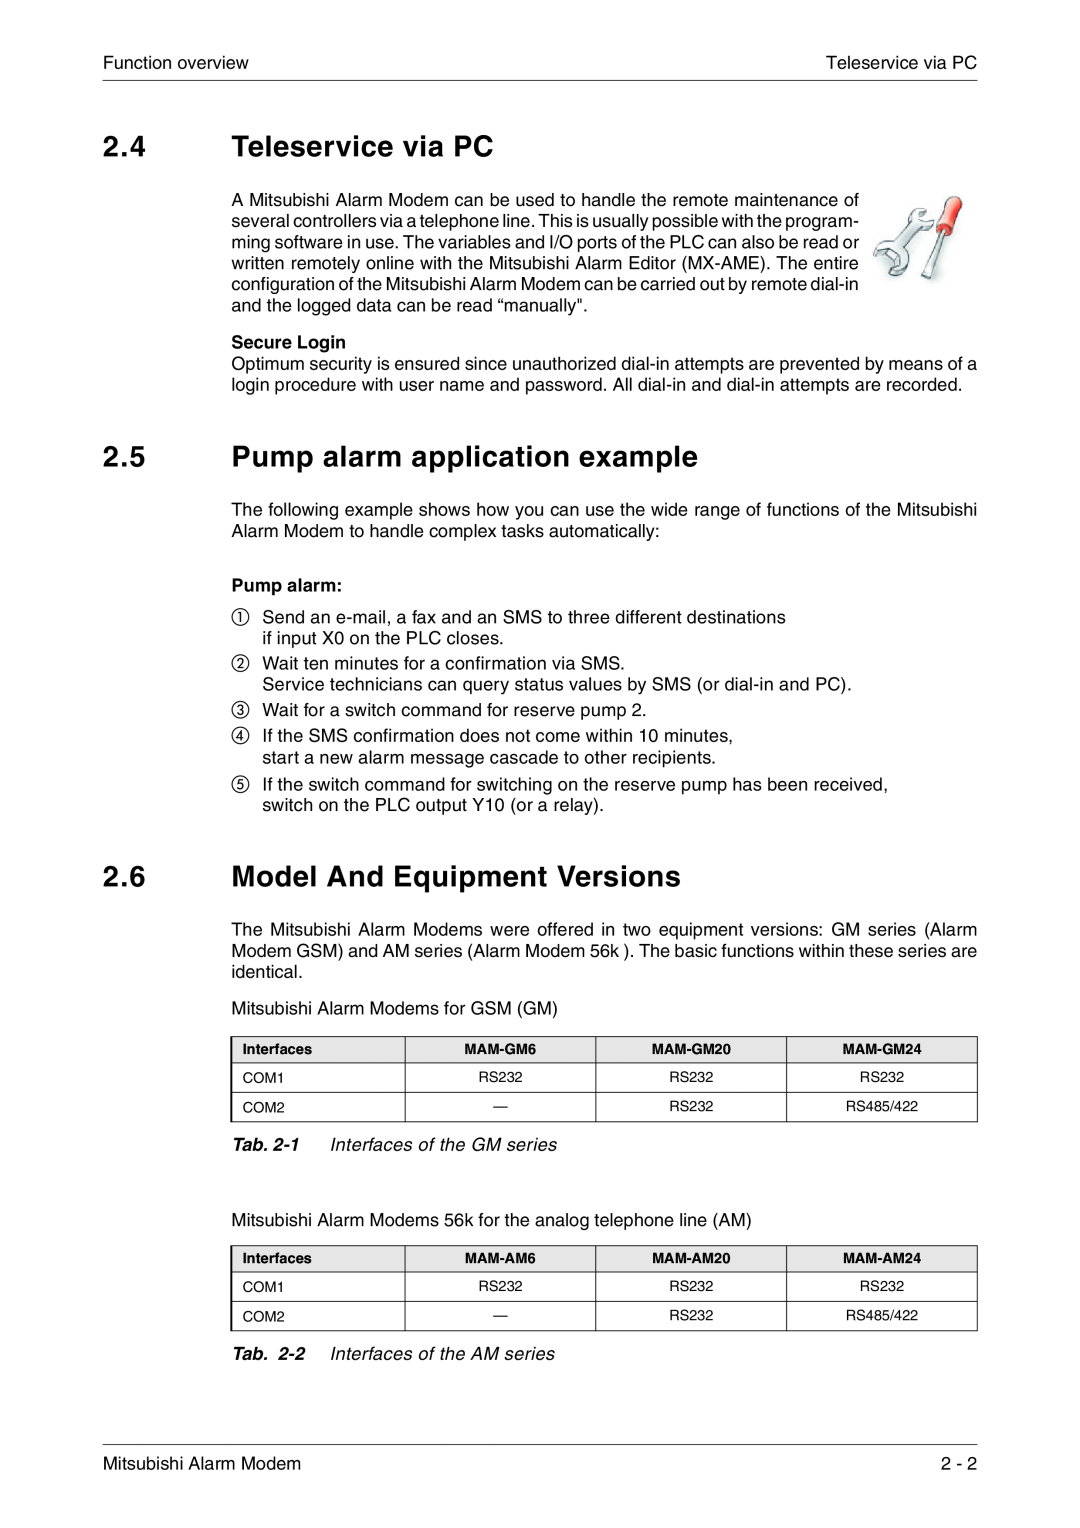 Mitsubishi Electronics MAM-GM20, MAM-AM6 Teleservice via PC, Pump alarm application example, Model And Equipment Versions 